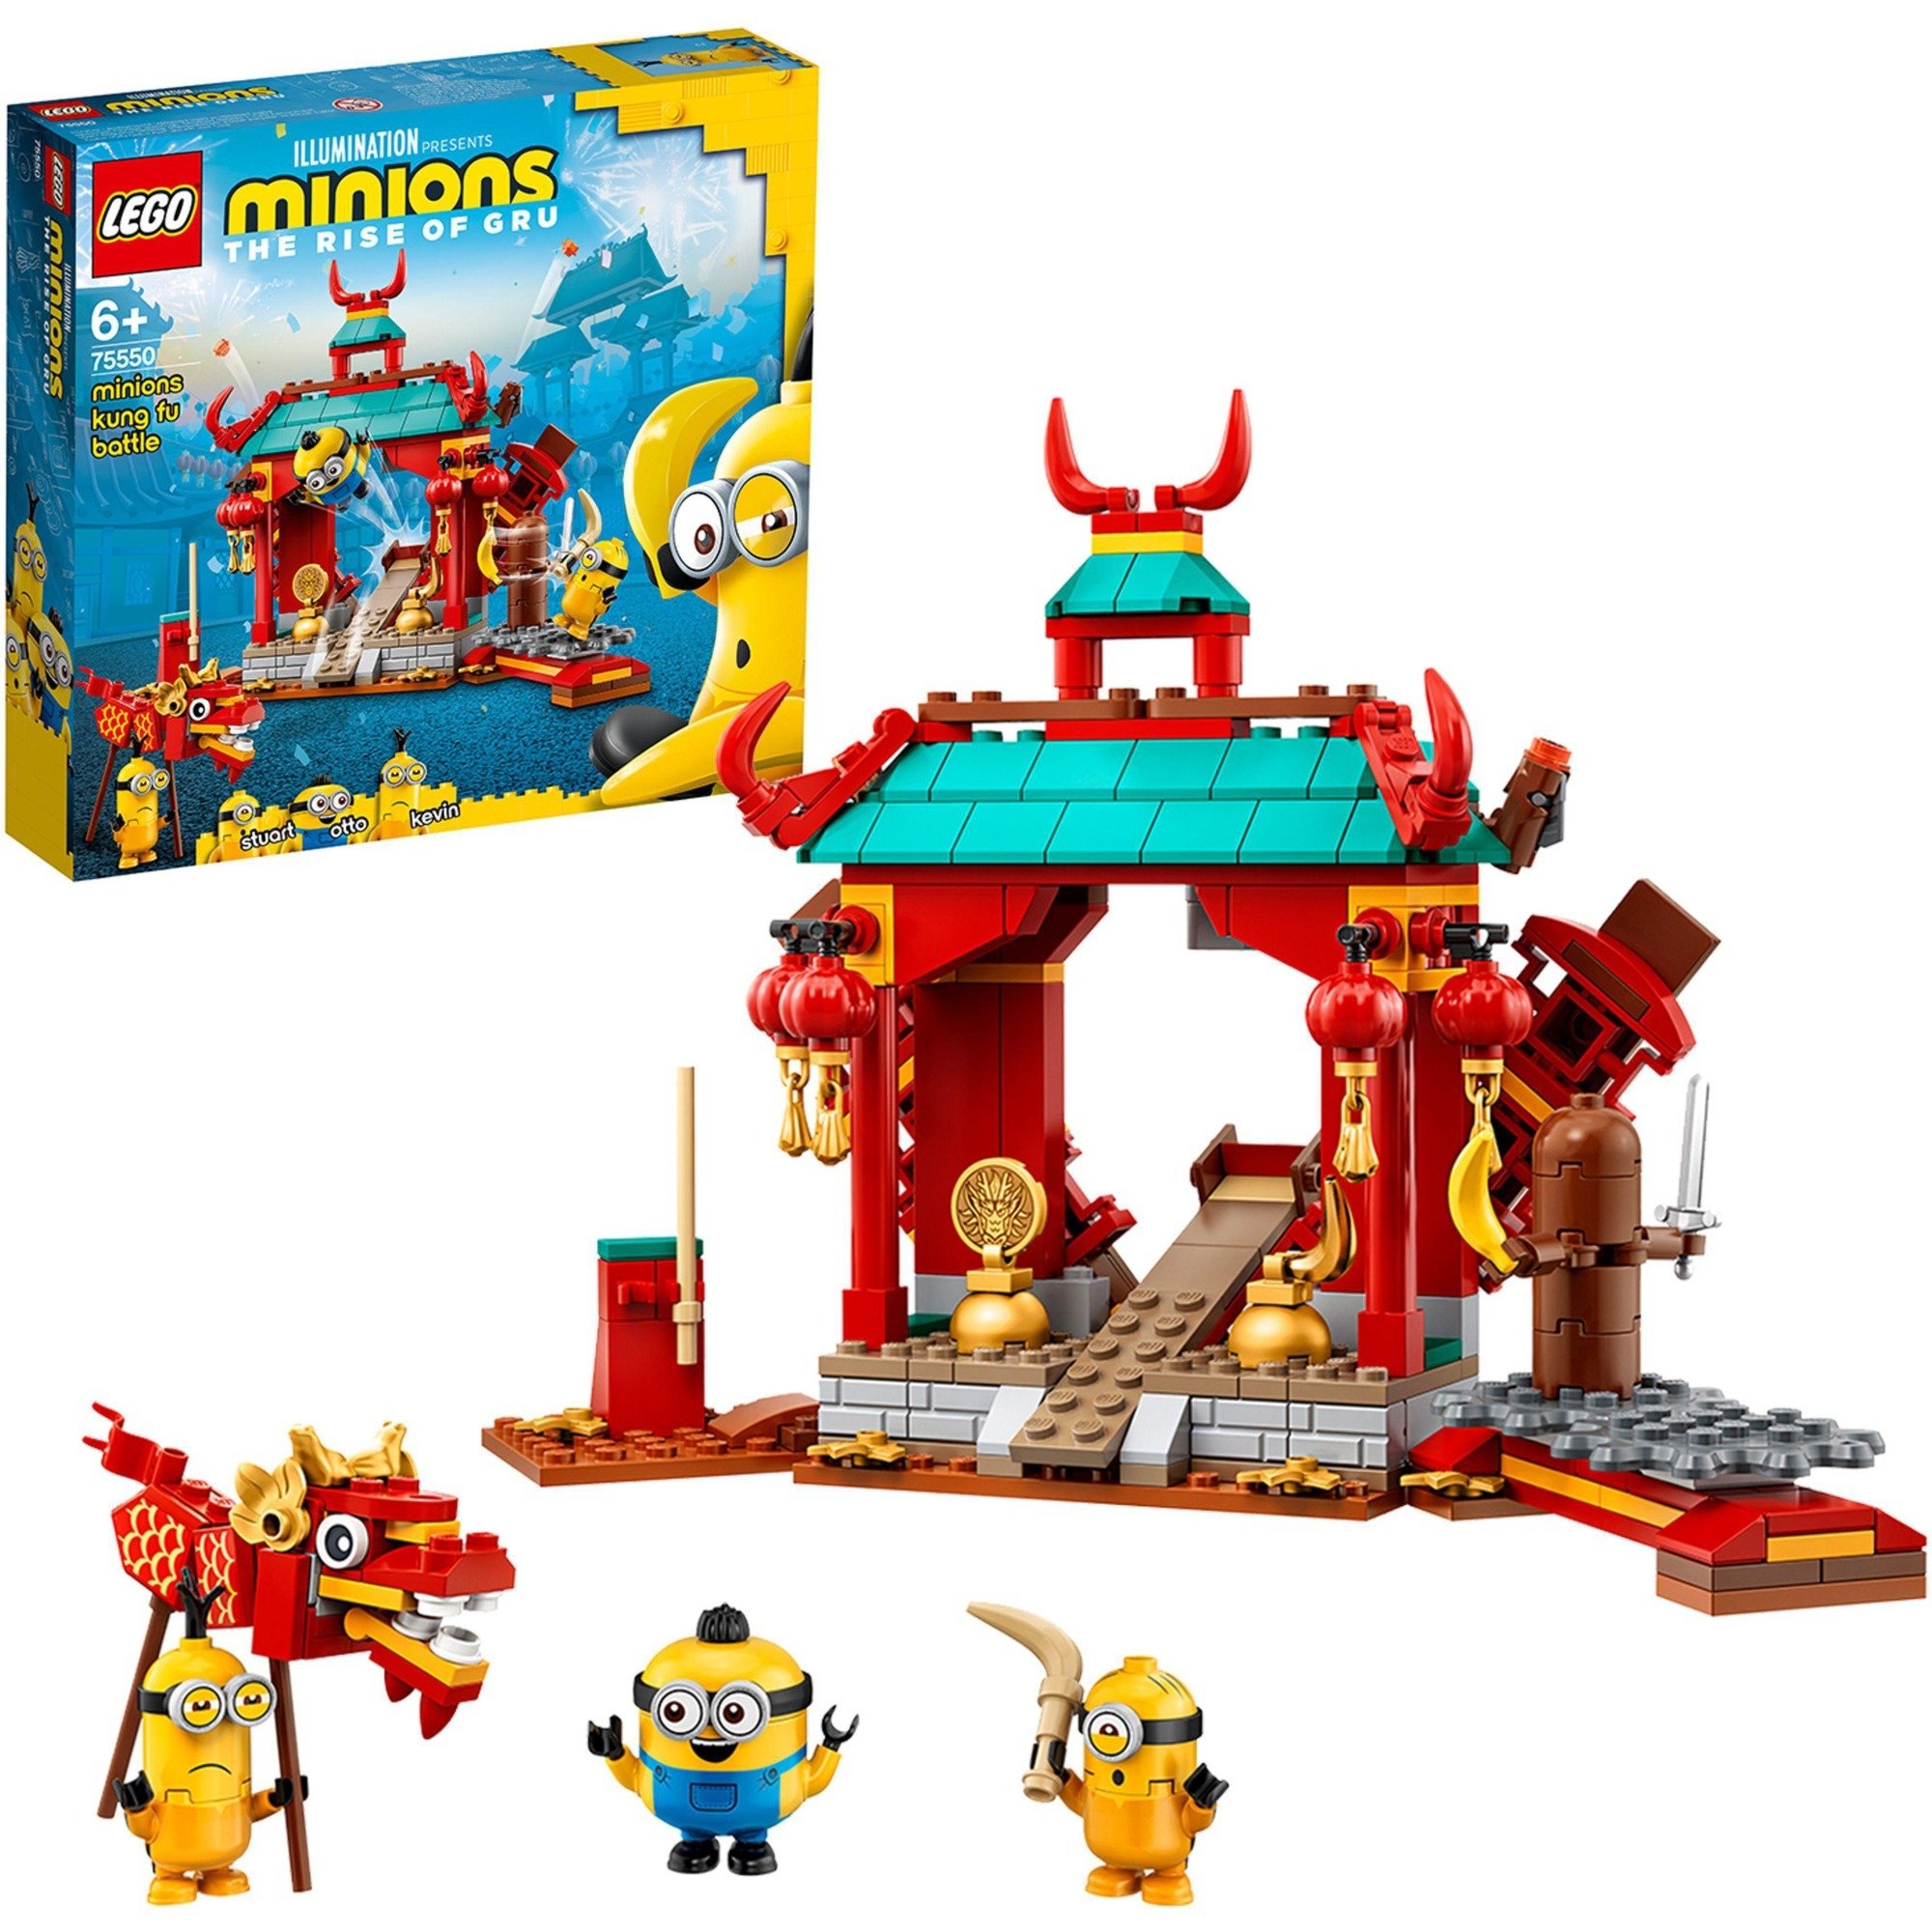 Spielzeug: Lego 75550 Minions Kung Fu Tempel